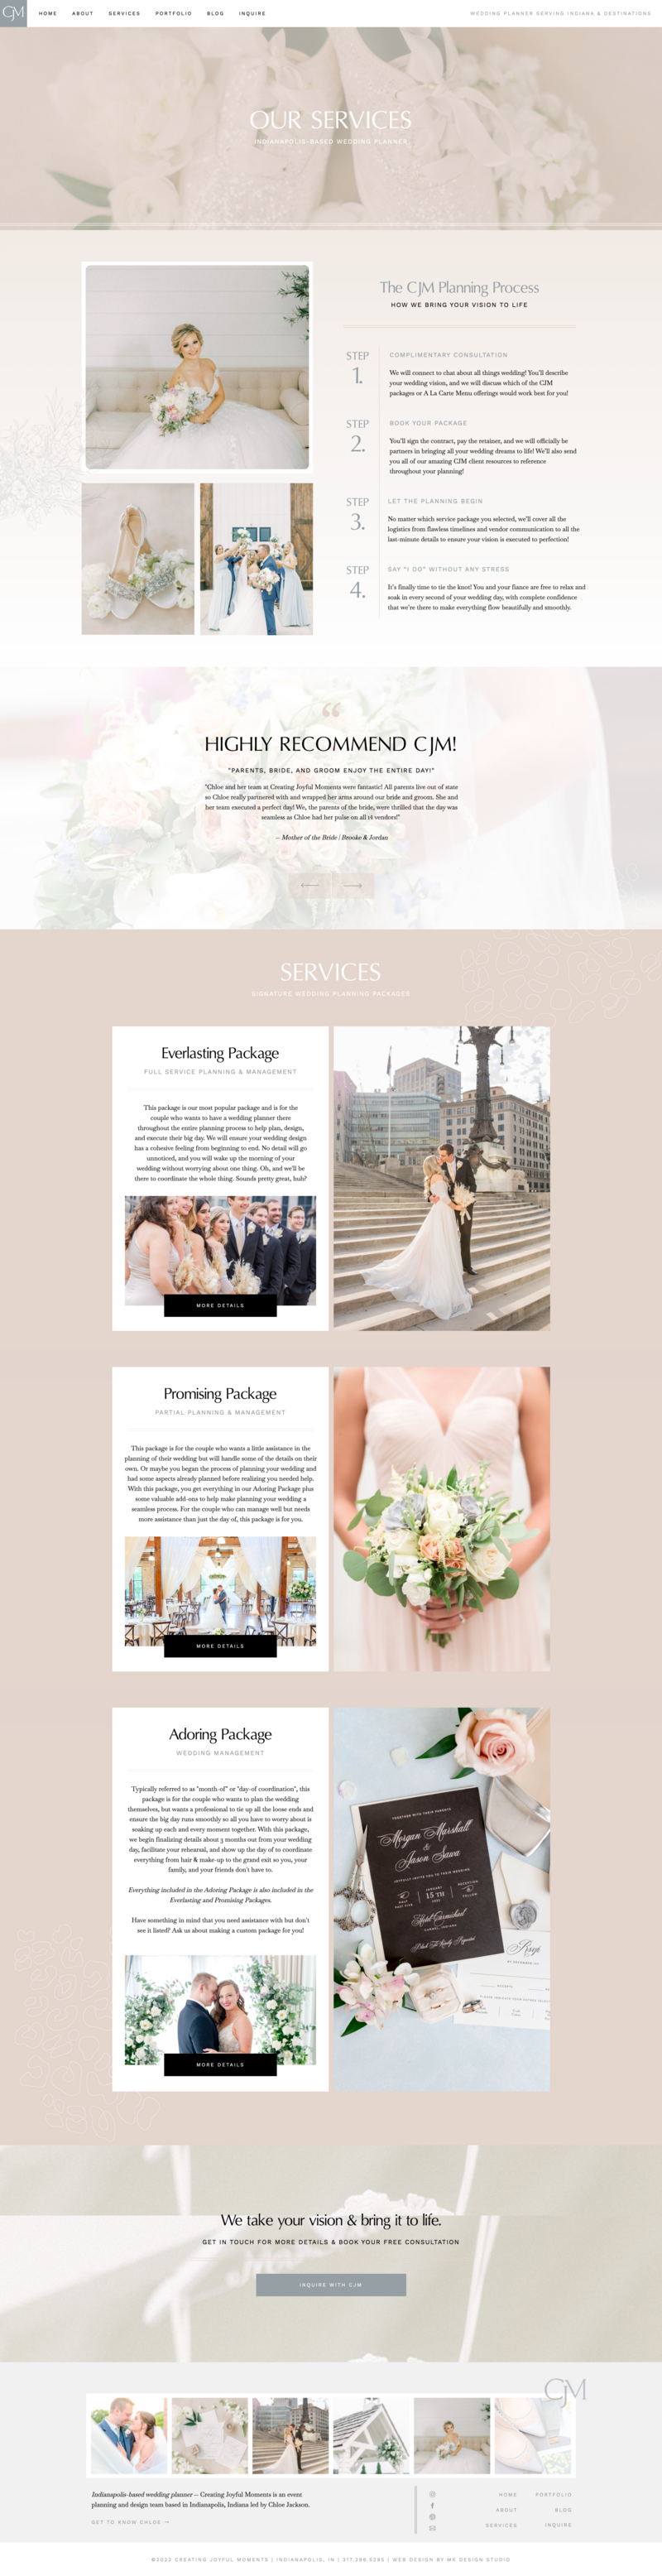 mockup showing a warm, neutral wedding planner website